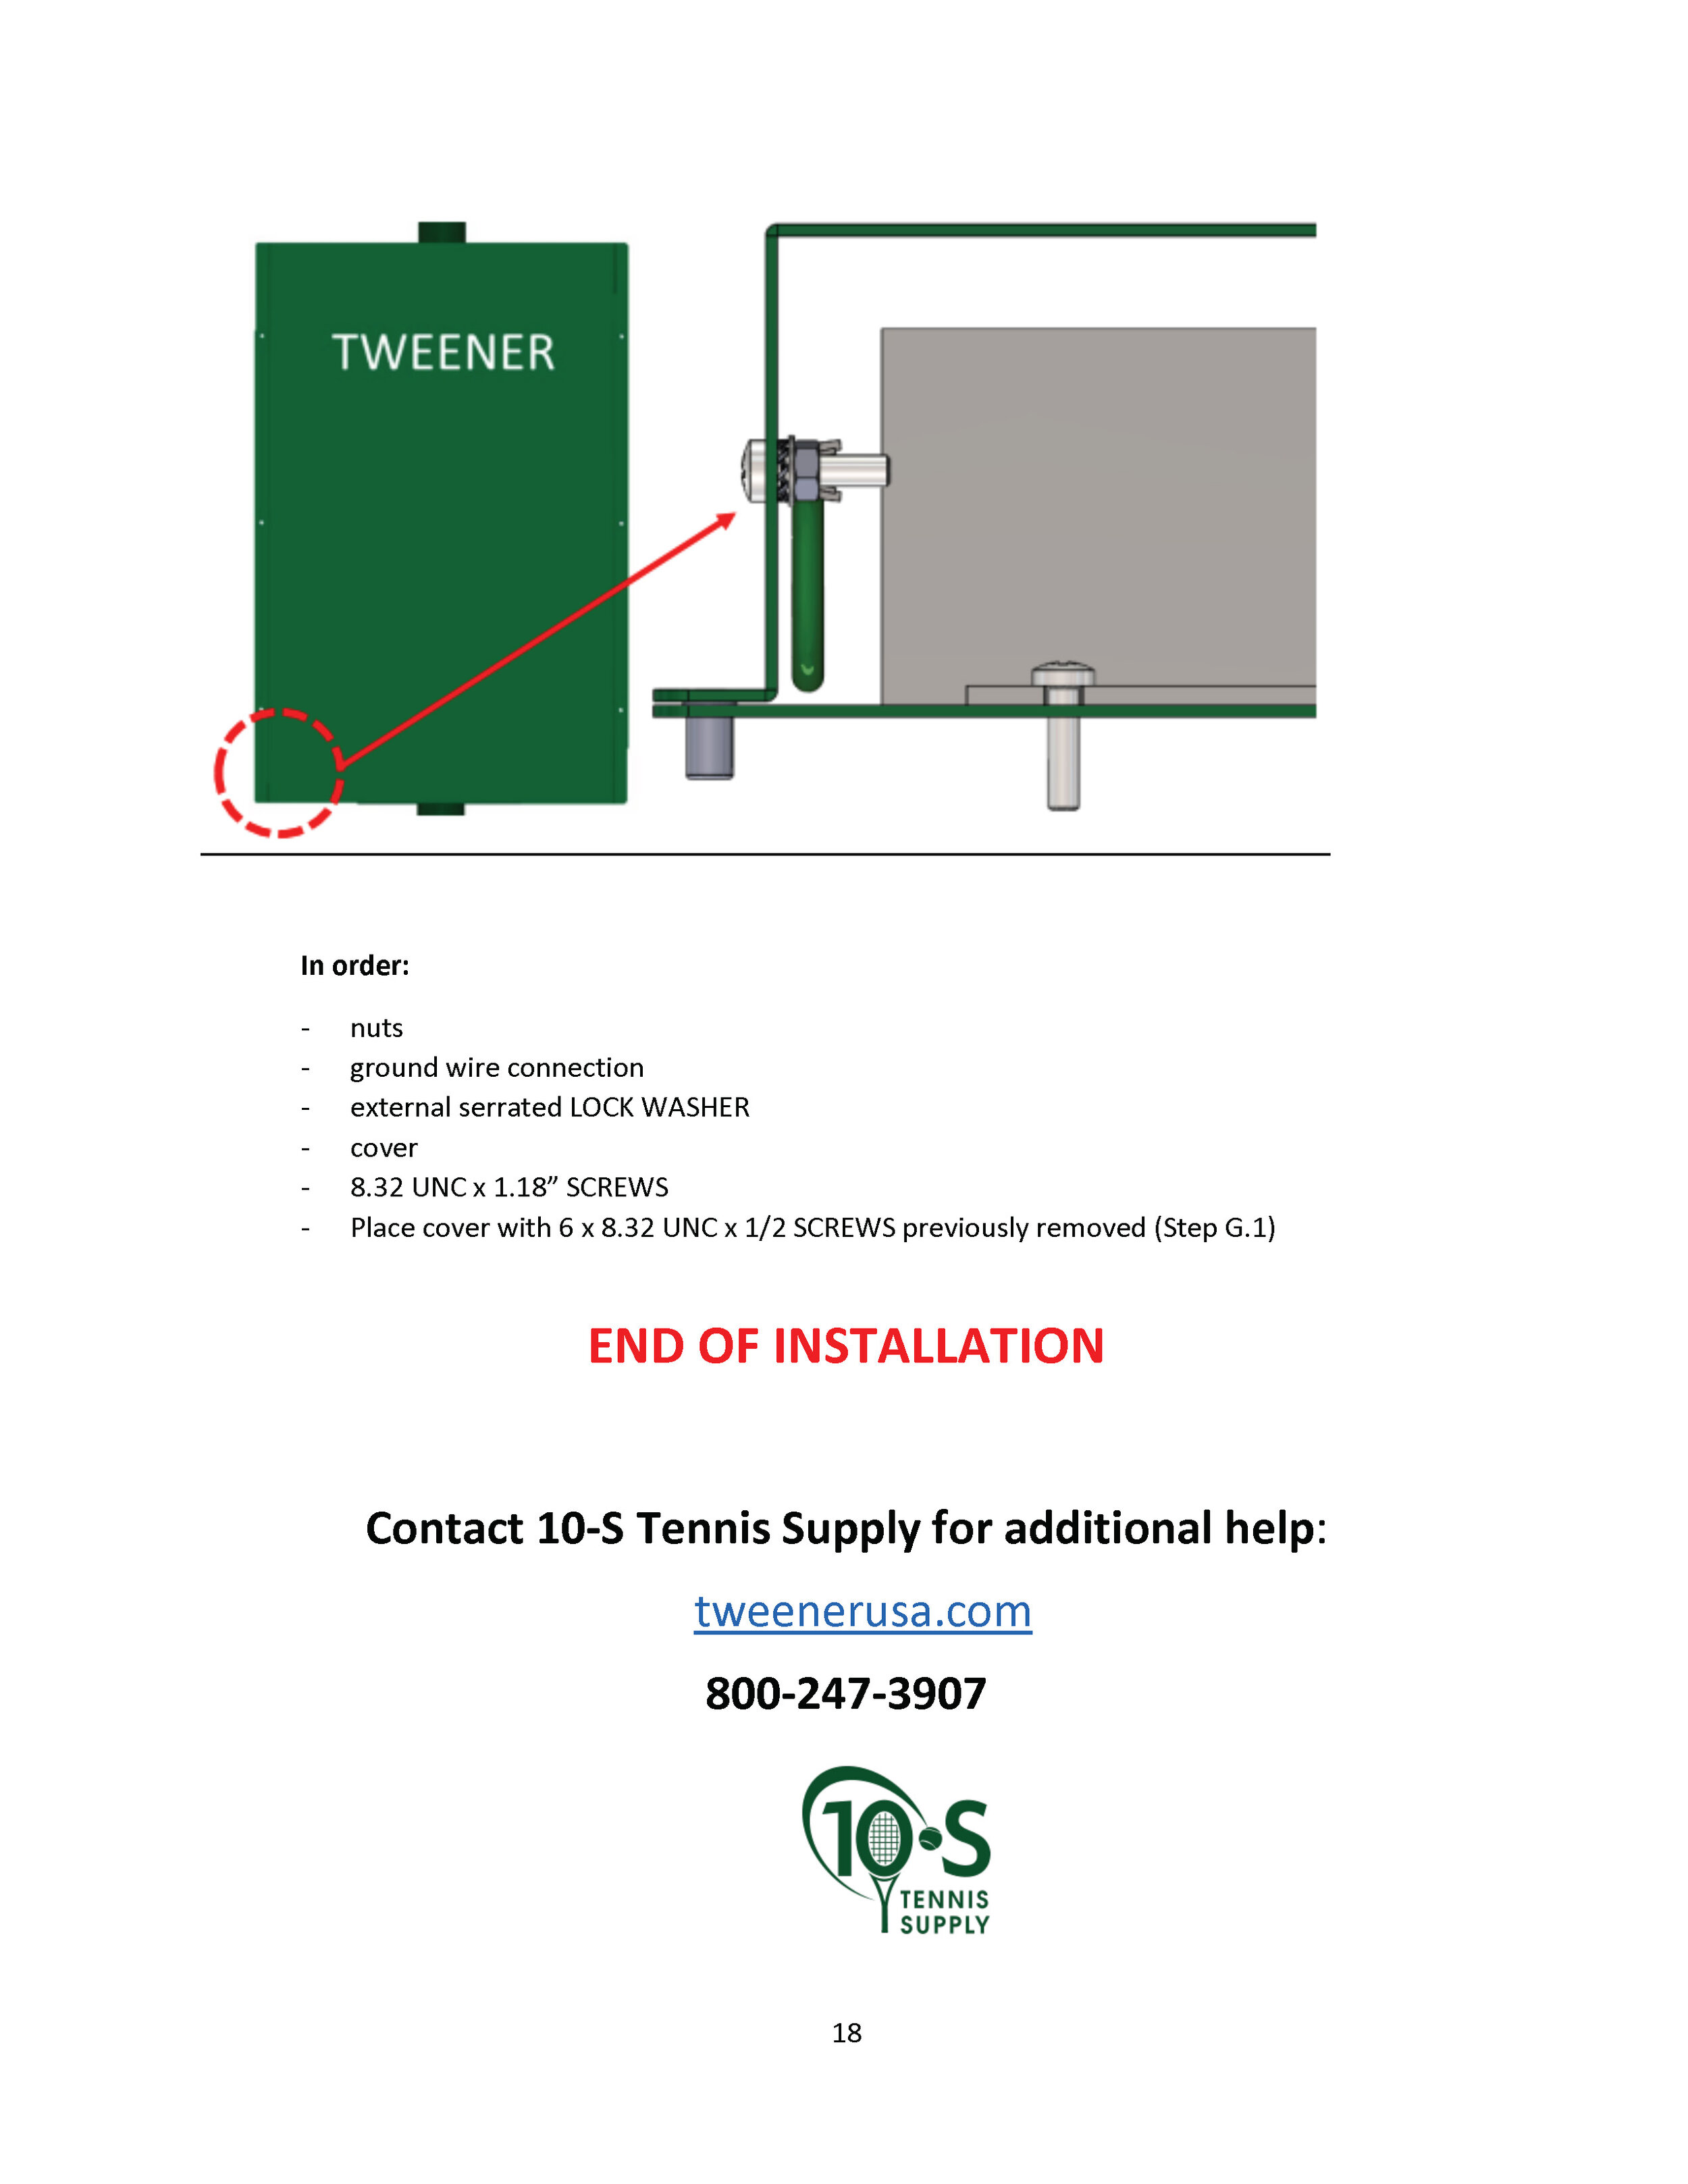 Tweener USA Installation Guide - Oct 15 2021 Print_Page_18.jpg